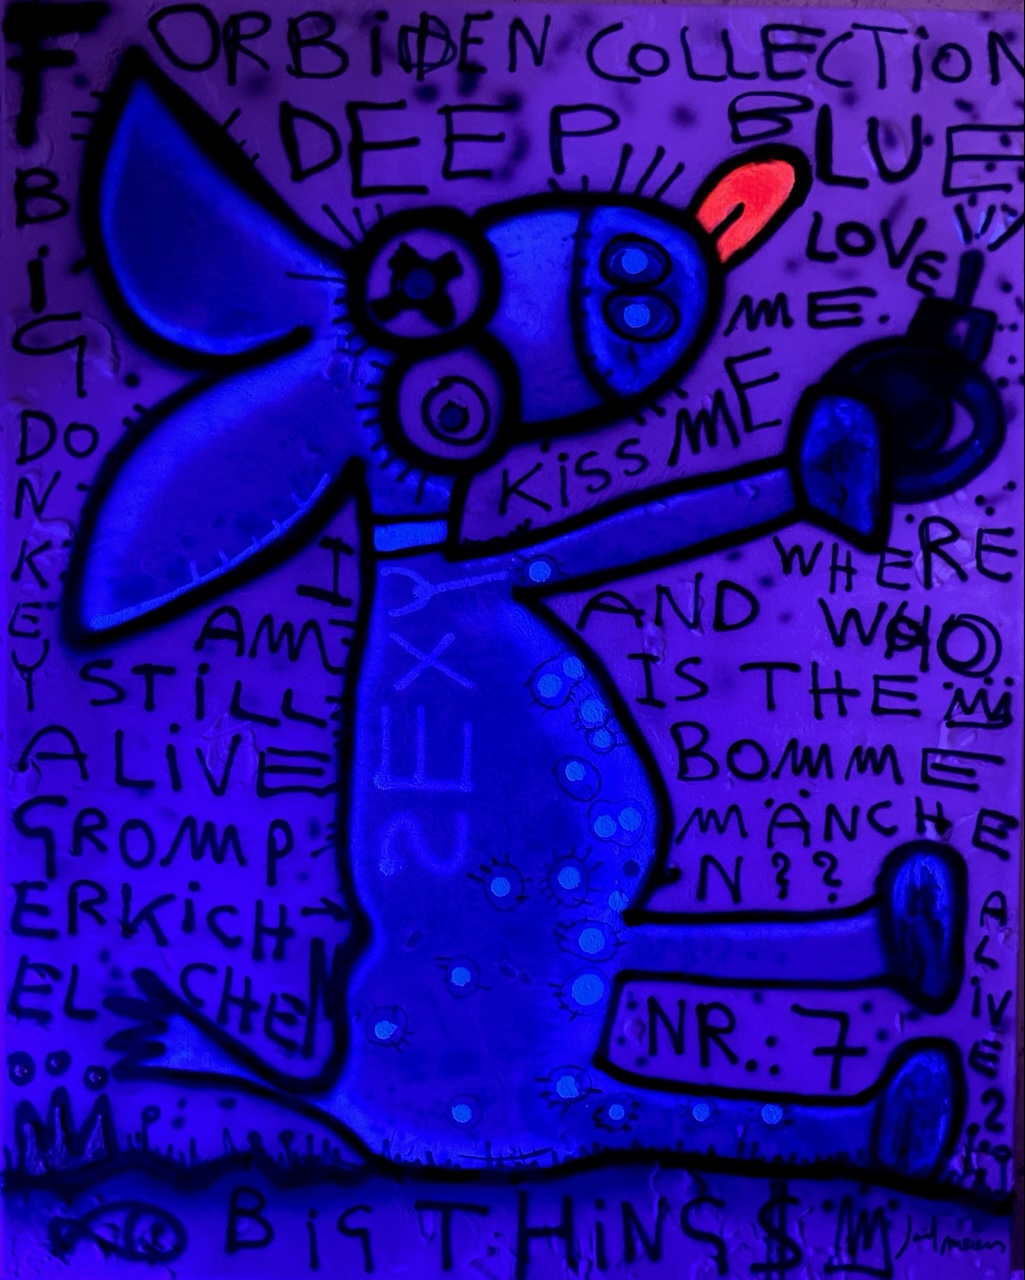 Forbiden Collection Blue Donkey blacklight glow